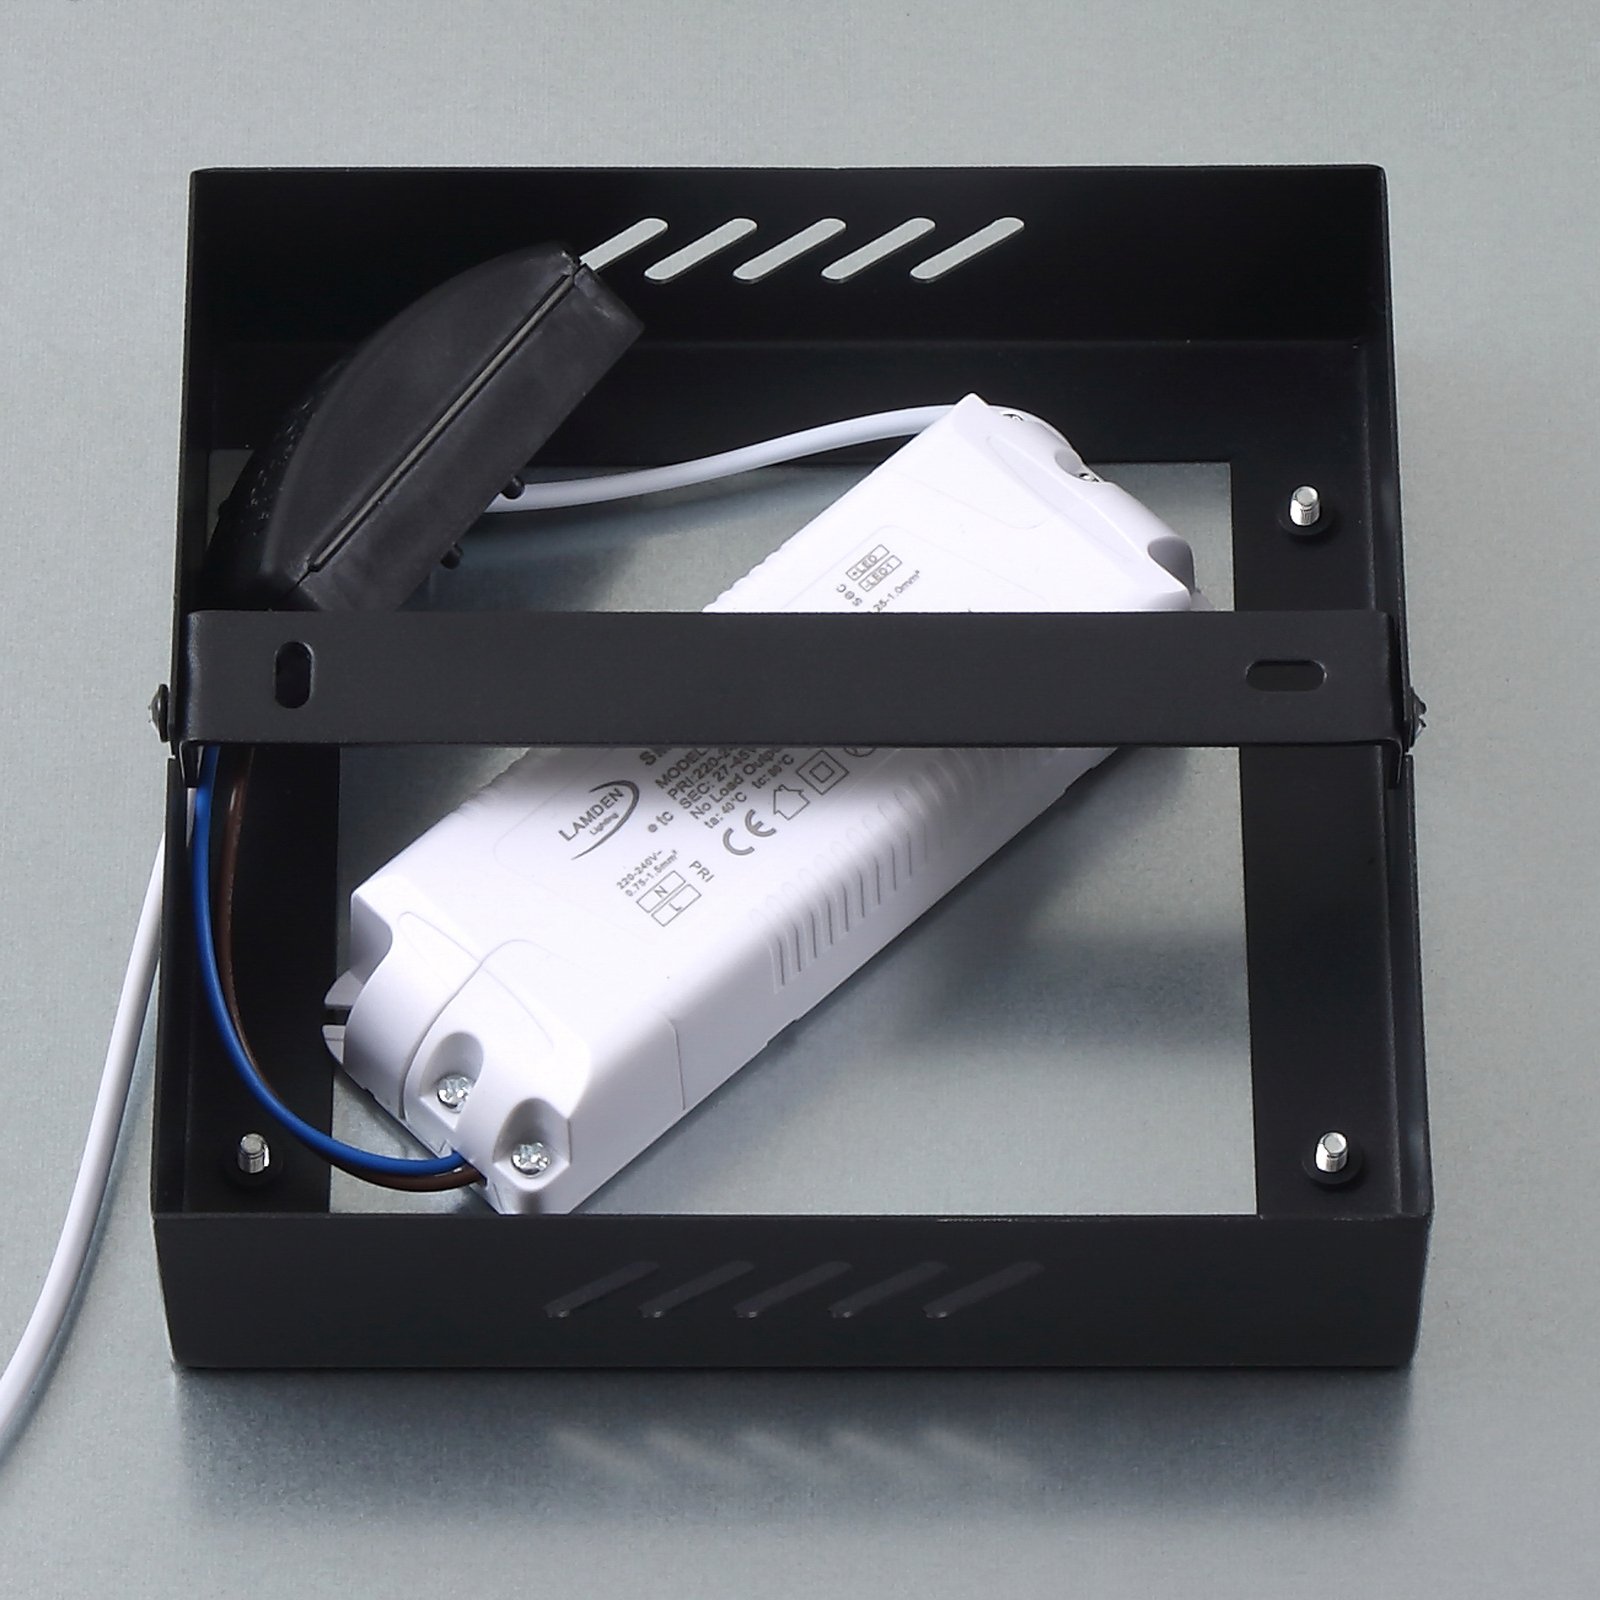 Lindby LED-panel Enhife, sort, 29,5 x 29,5 cm, aluminium